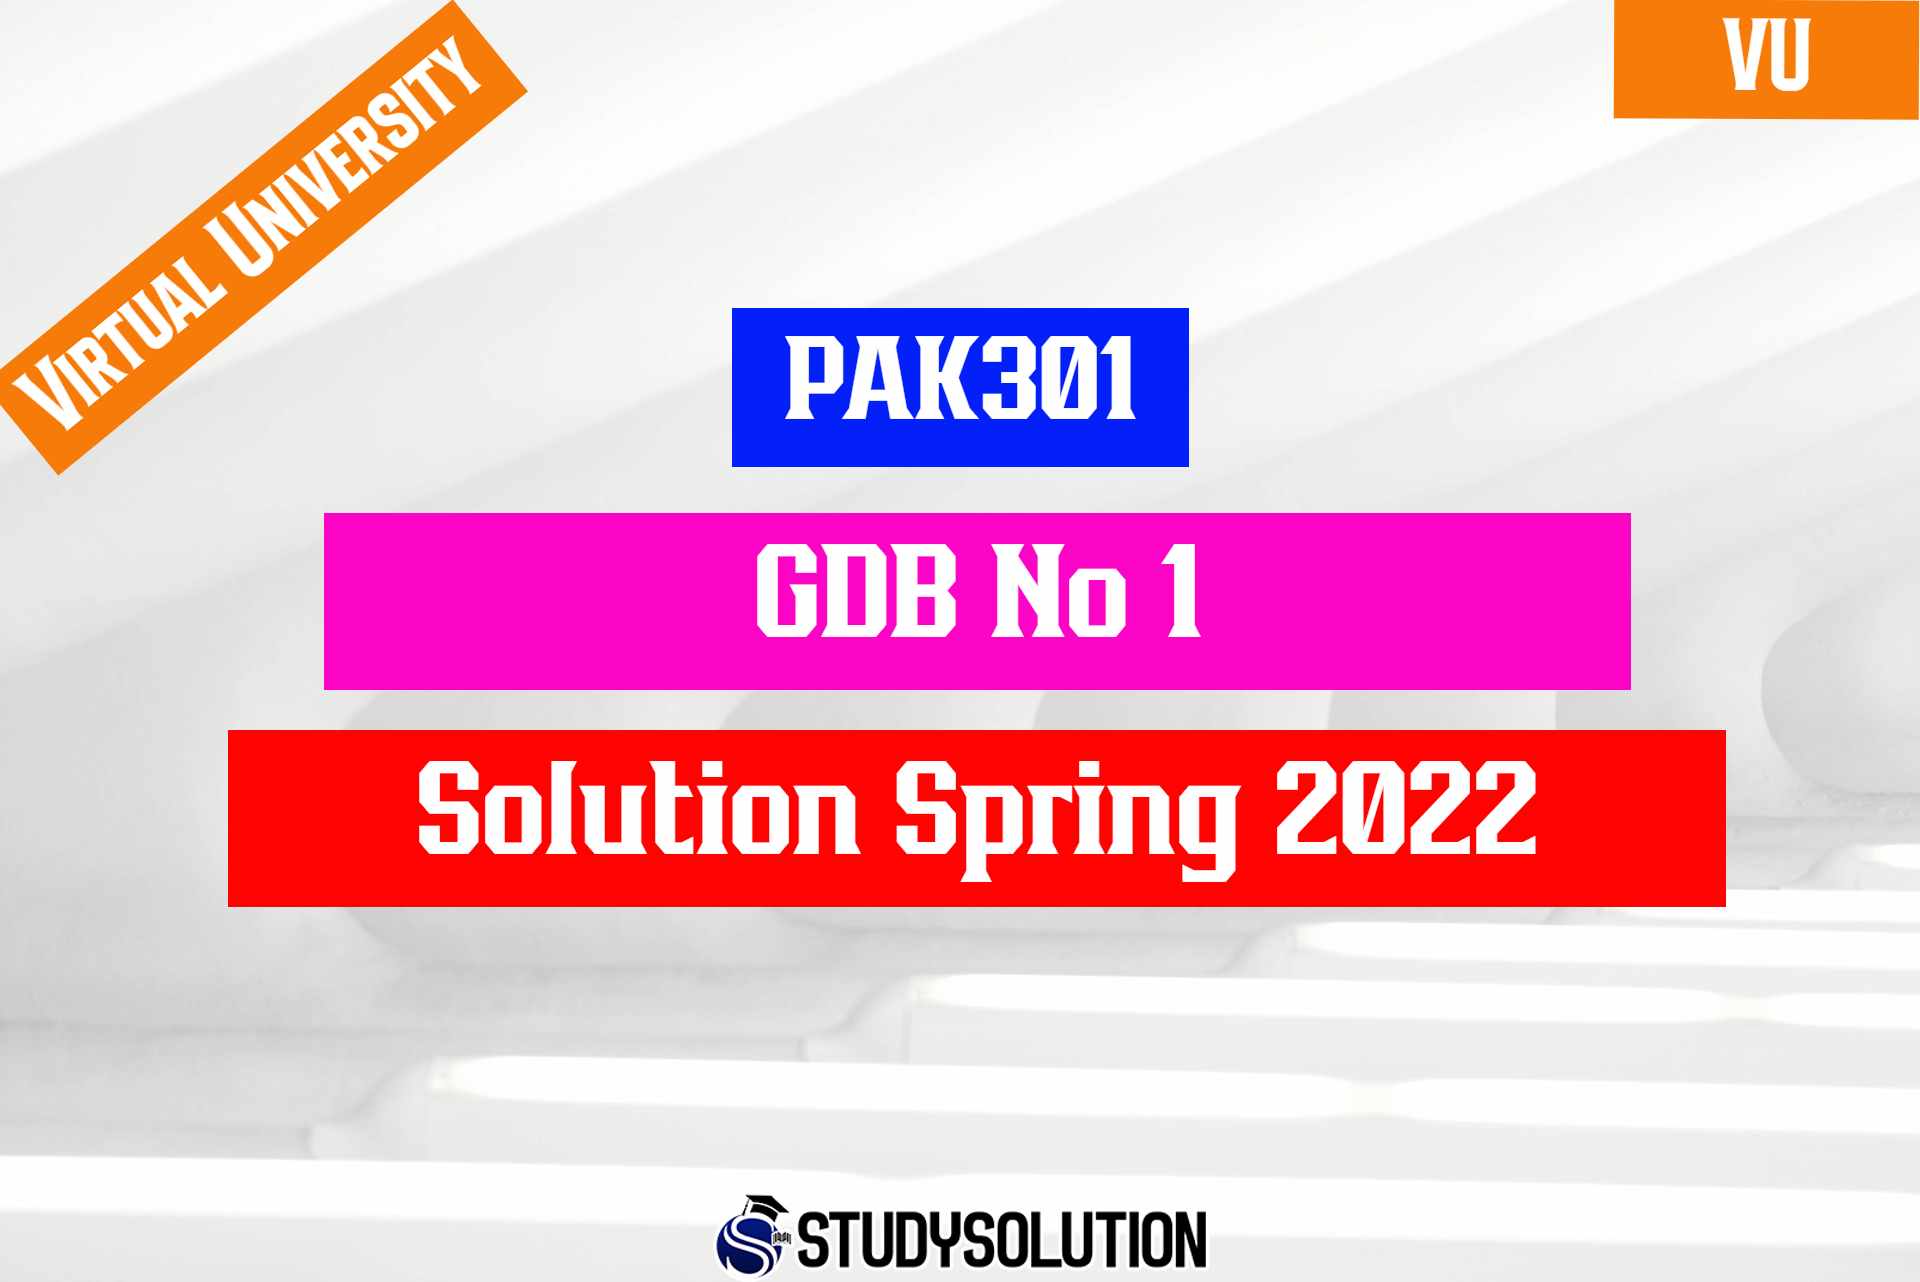 PAK301 GDB No 1 Solution Spring 2022